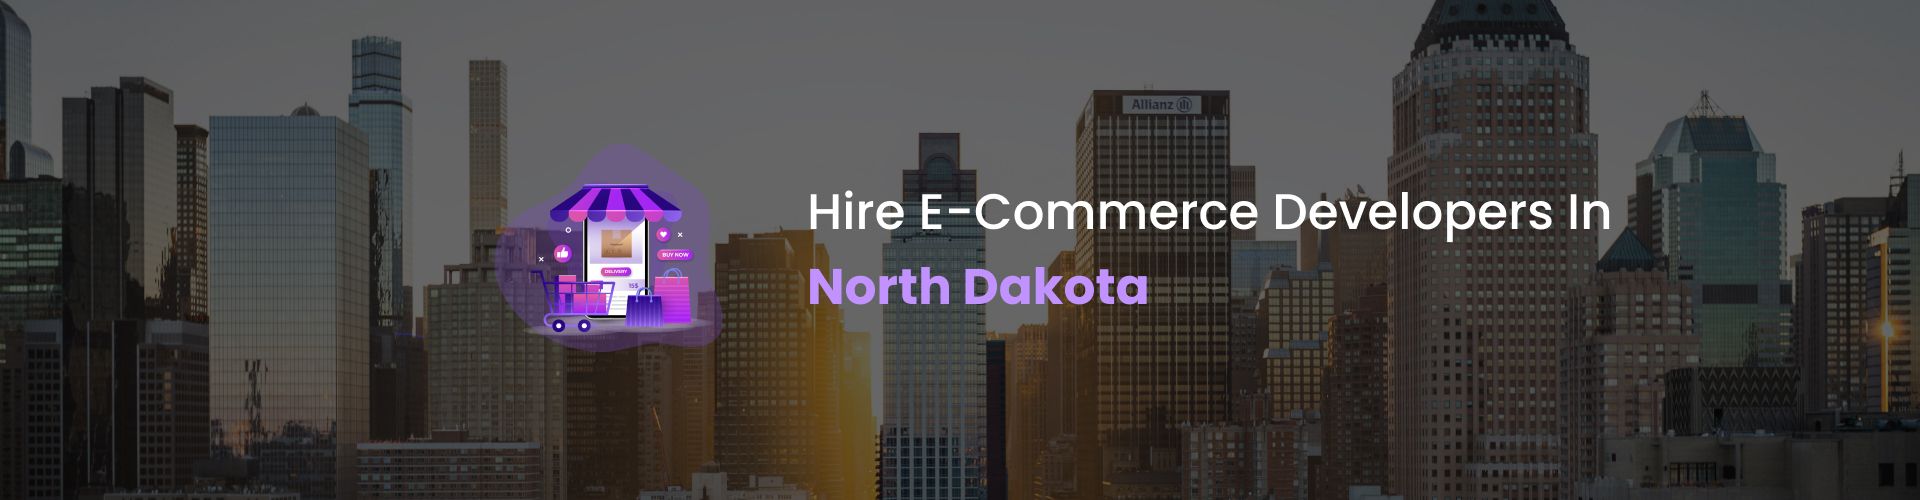 hire ecommerce developers in north dakota